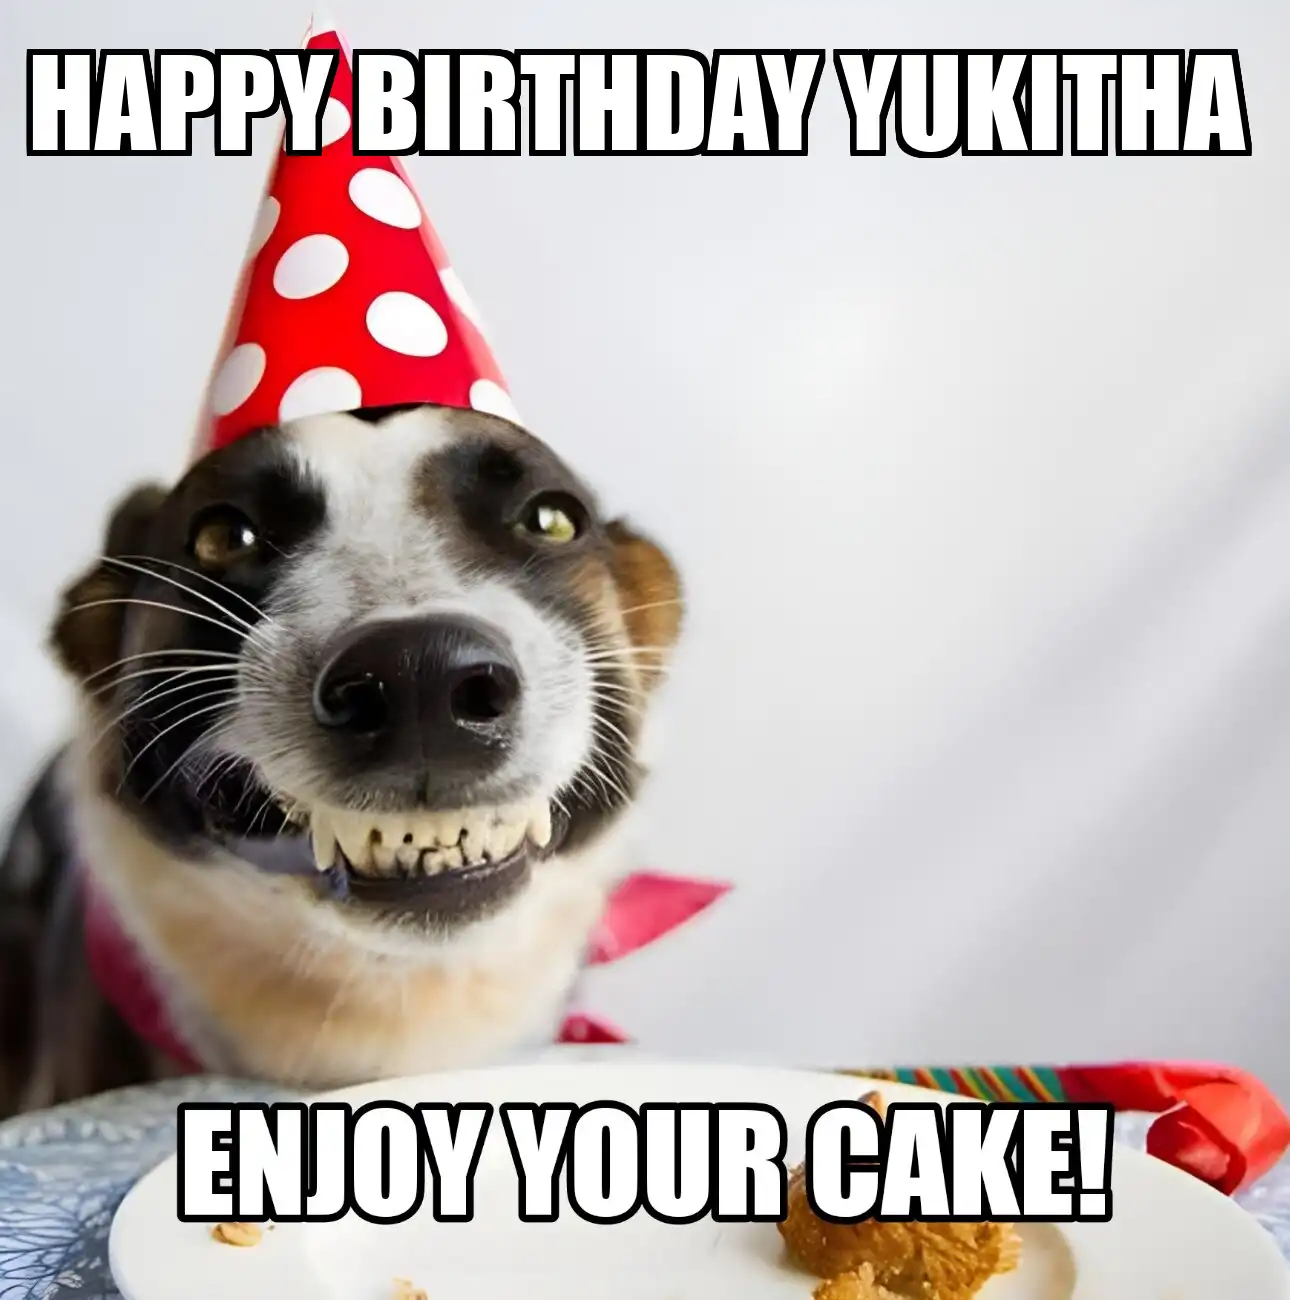 Happy Birthday Yukitha Enjoy Your Cake Dog Meme